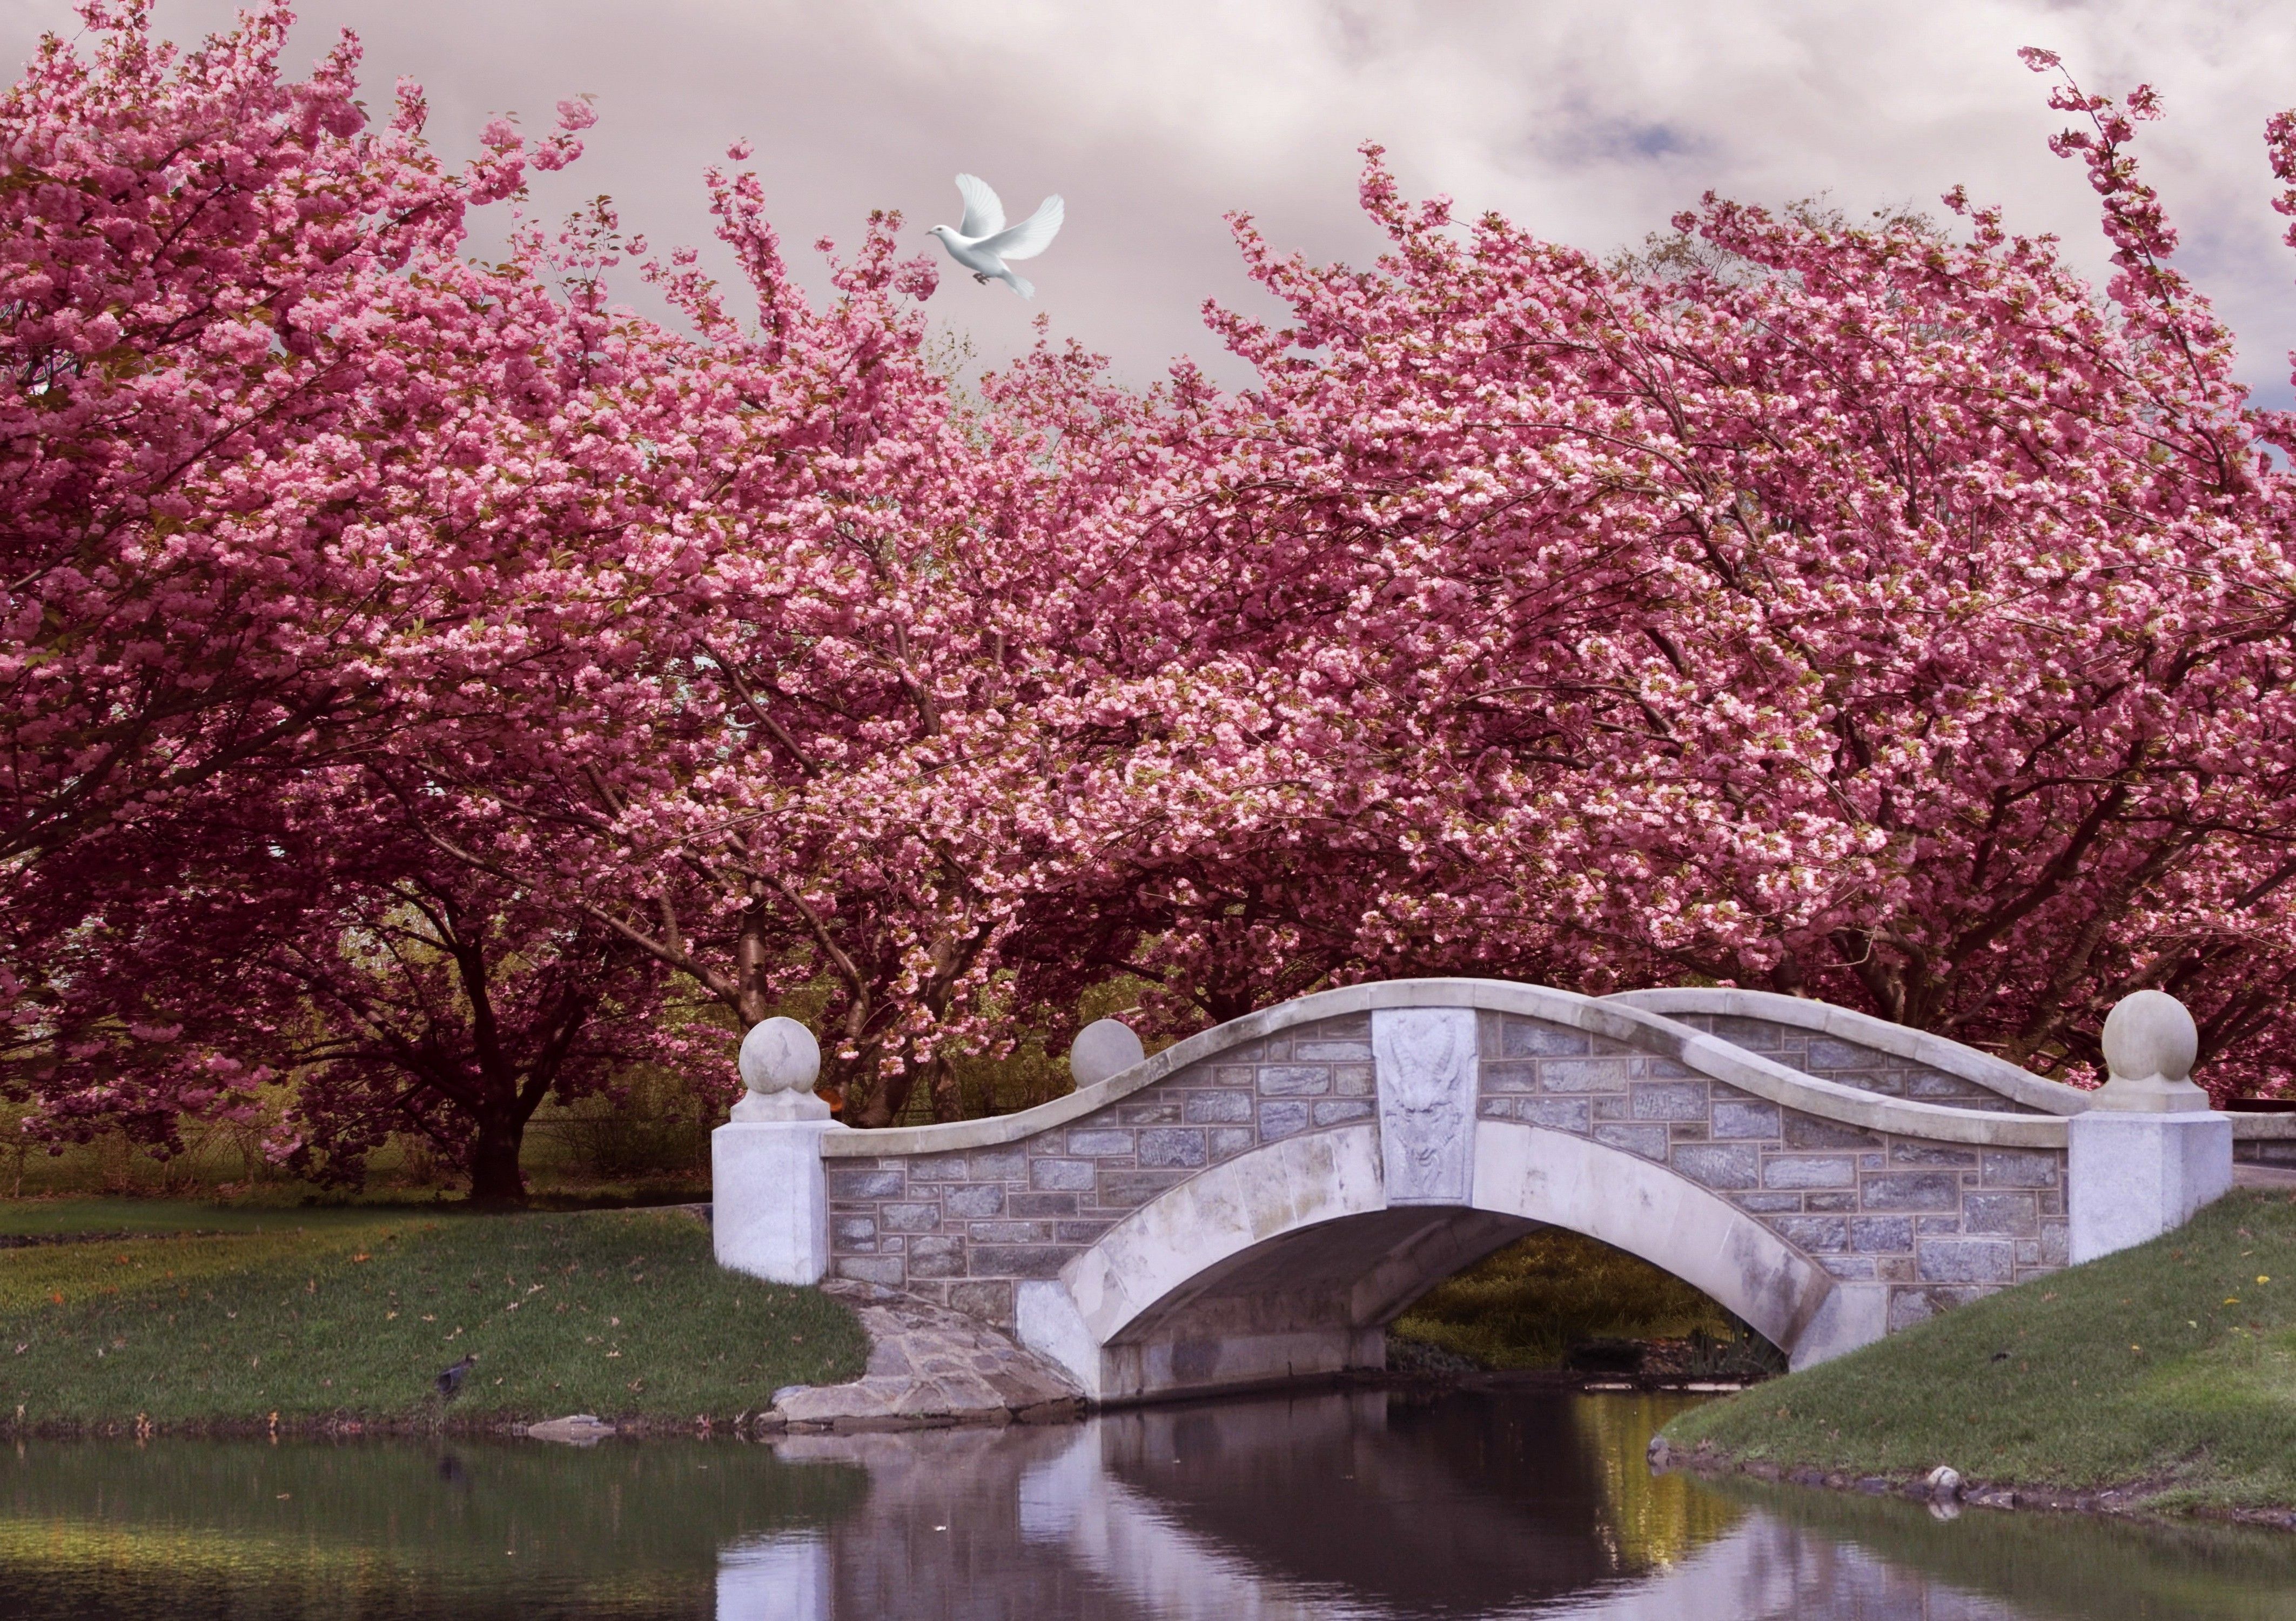 Pink Flowering Trees over Bridge 4k Ultra HD Wallpaper